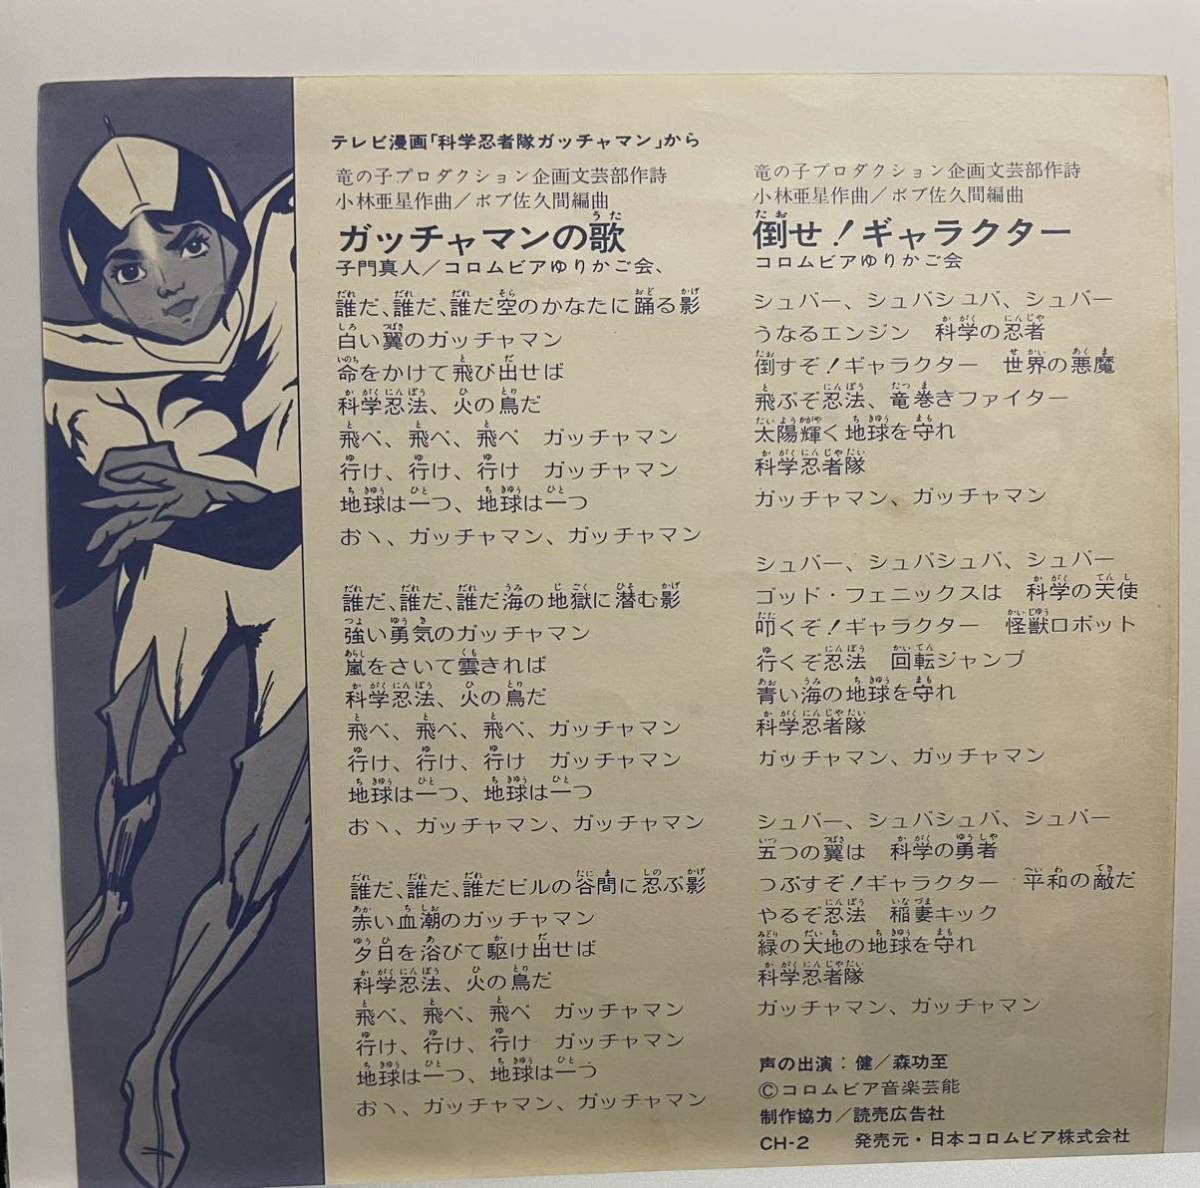  Showa Retro аналог запись JAKQ Dengekitai / Gatchaman / Casshern EP 2 листов 7 дюймовый Squadron моно аниме песни из аниме 